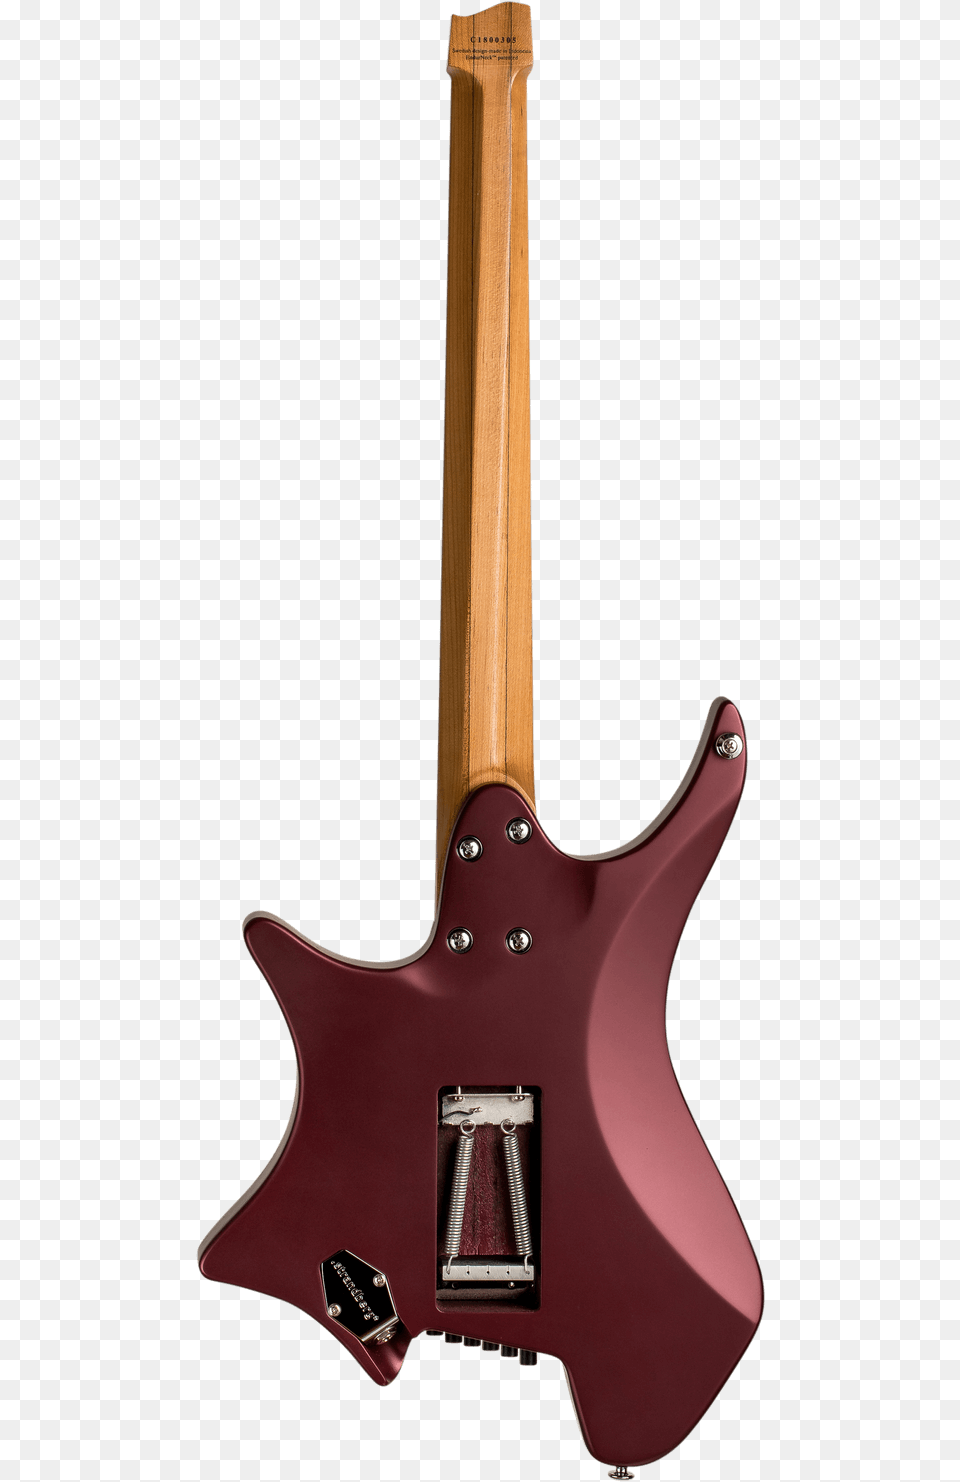 Piece Of String, Electric Guitar, Guitar, Musical Instrument, Bass Guitar Png Image